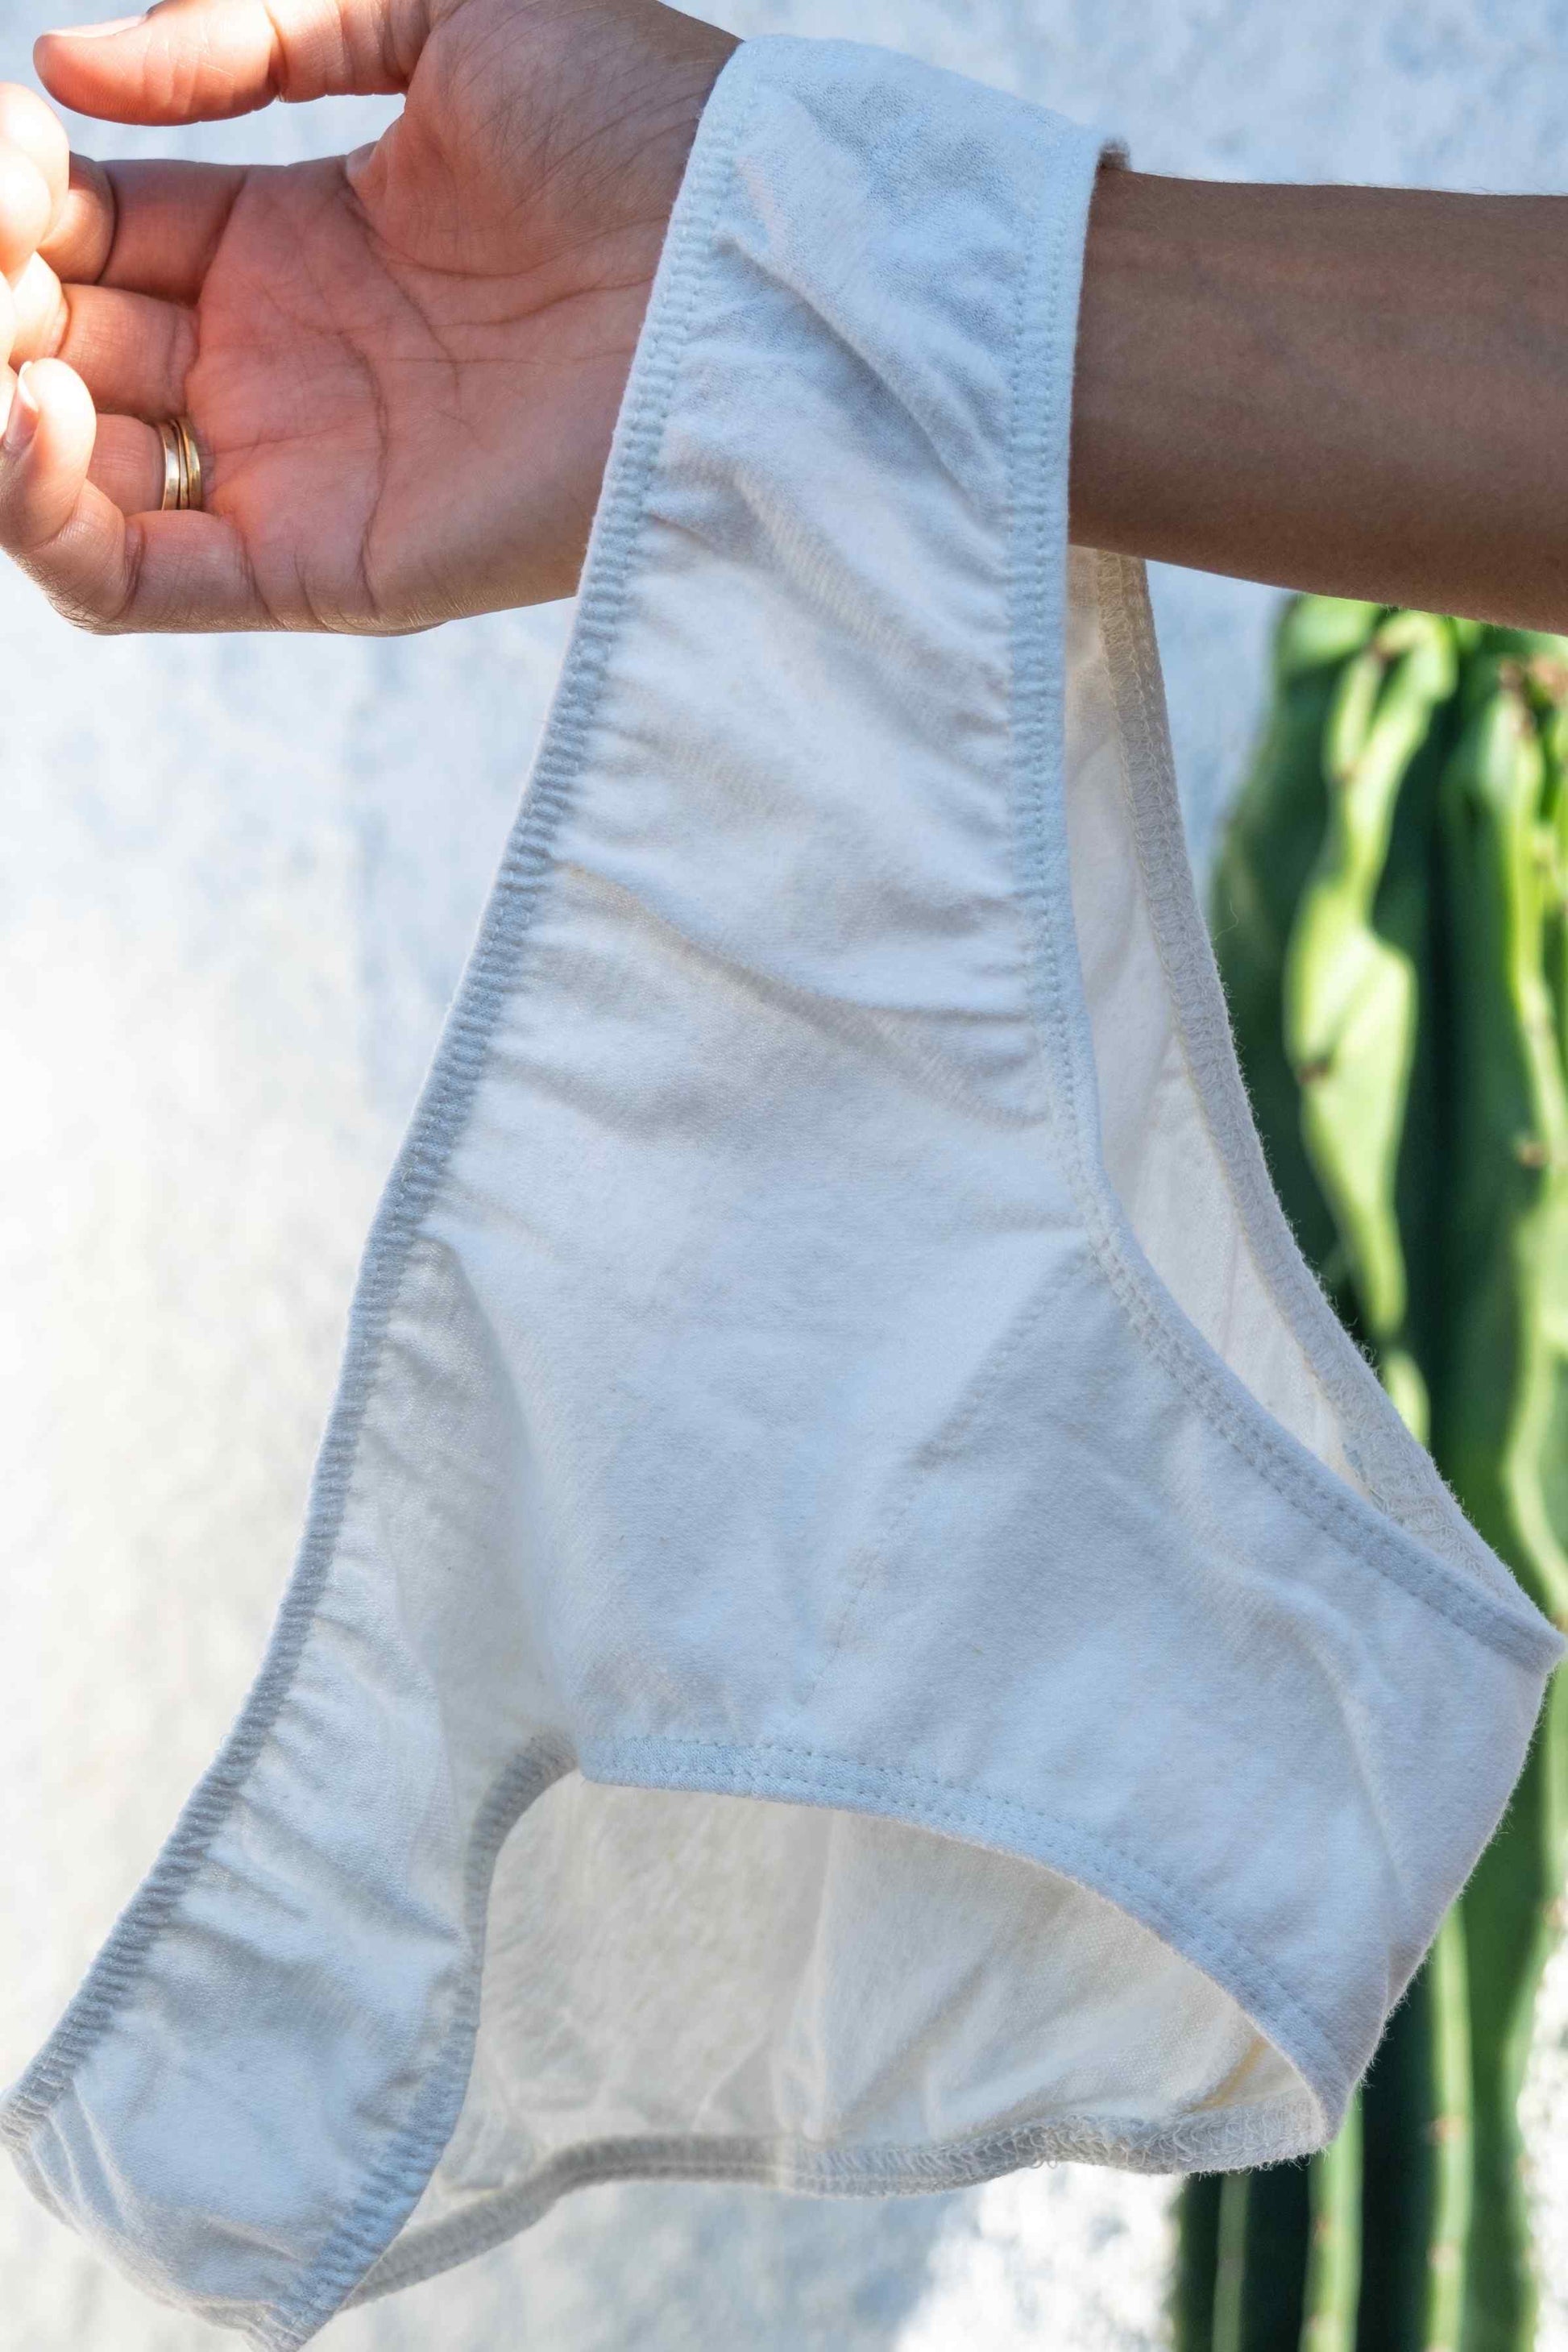 Panties - Underwear - Apparel - Women